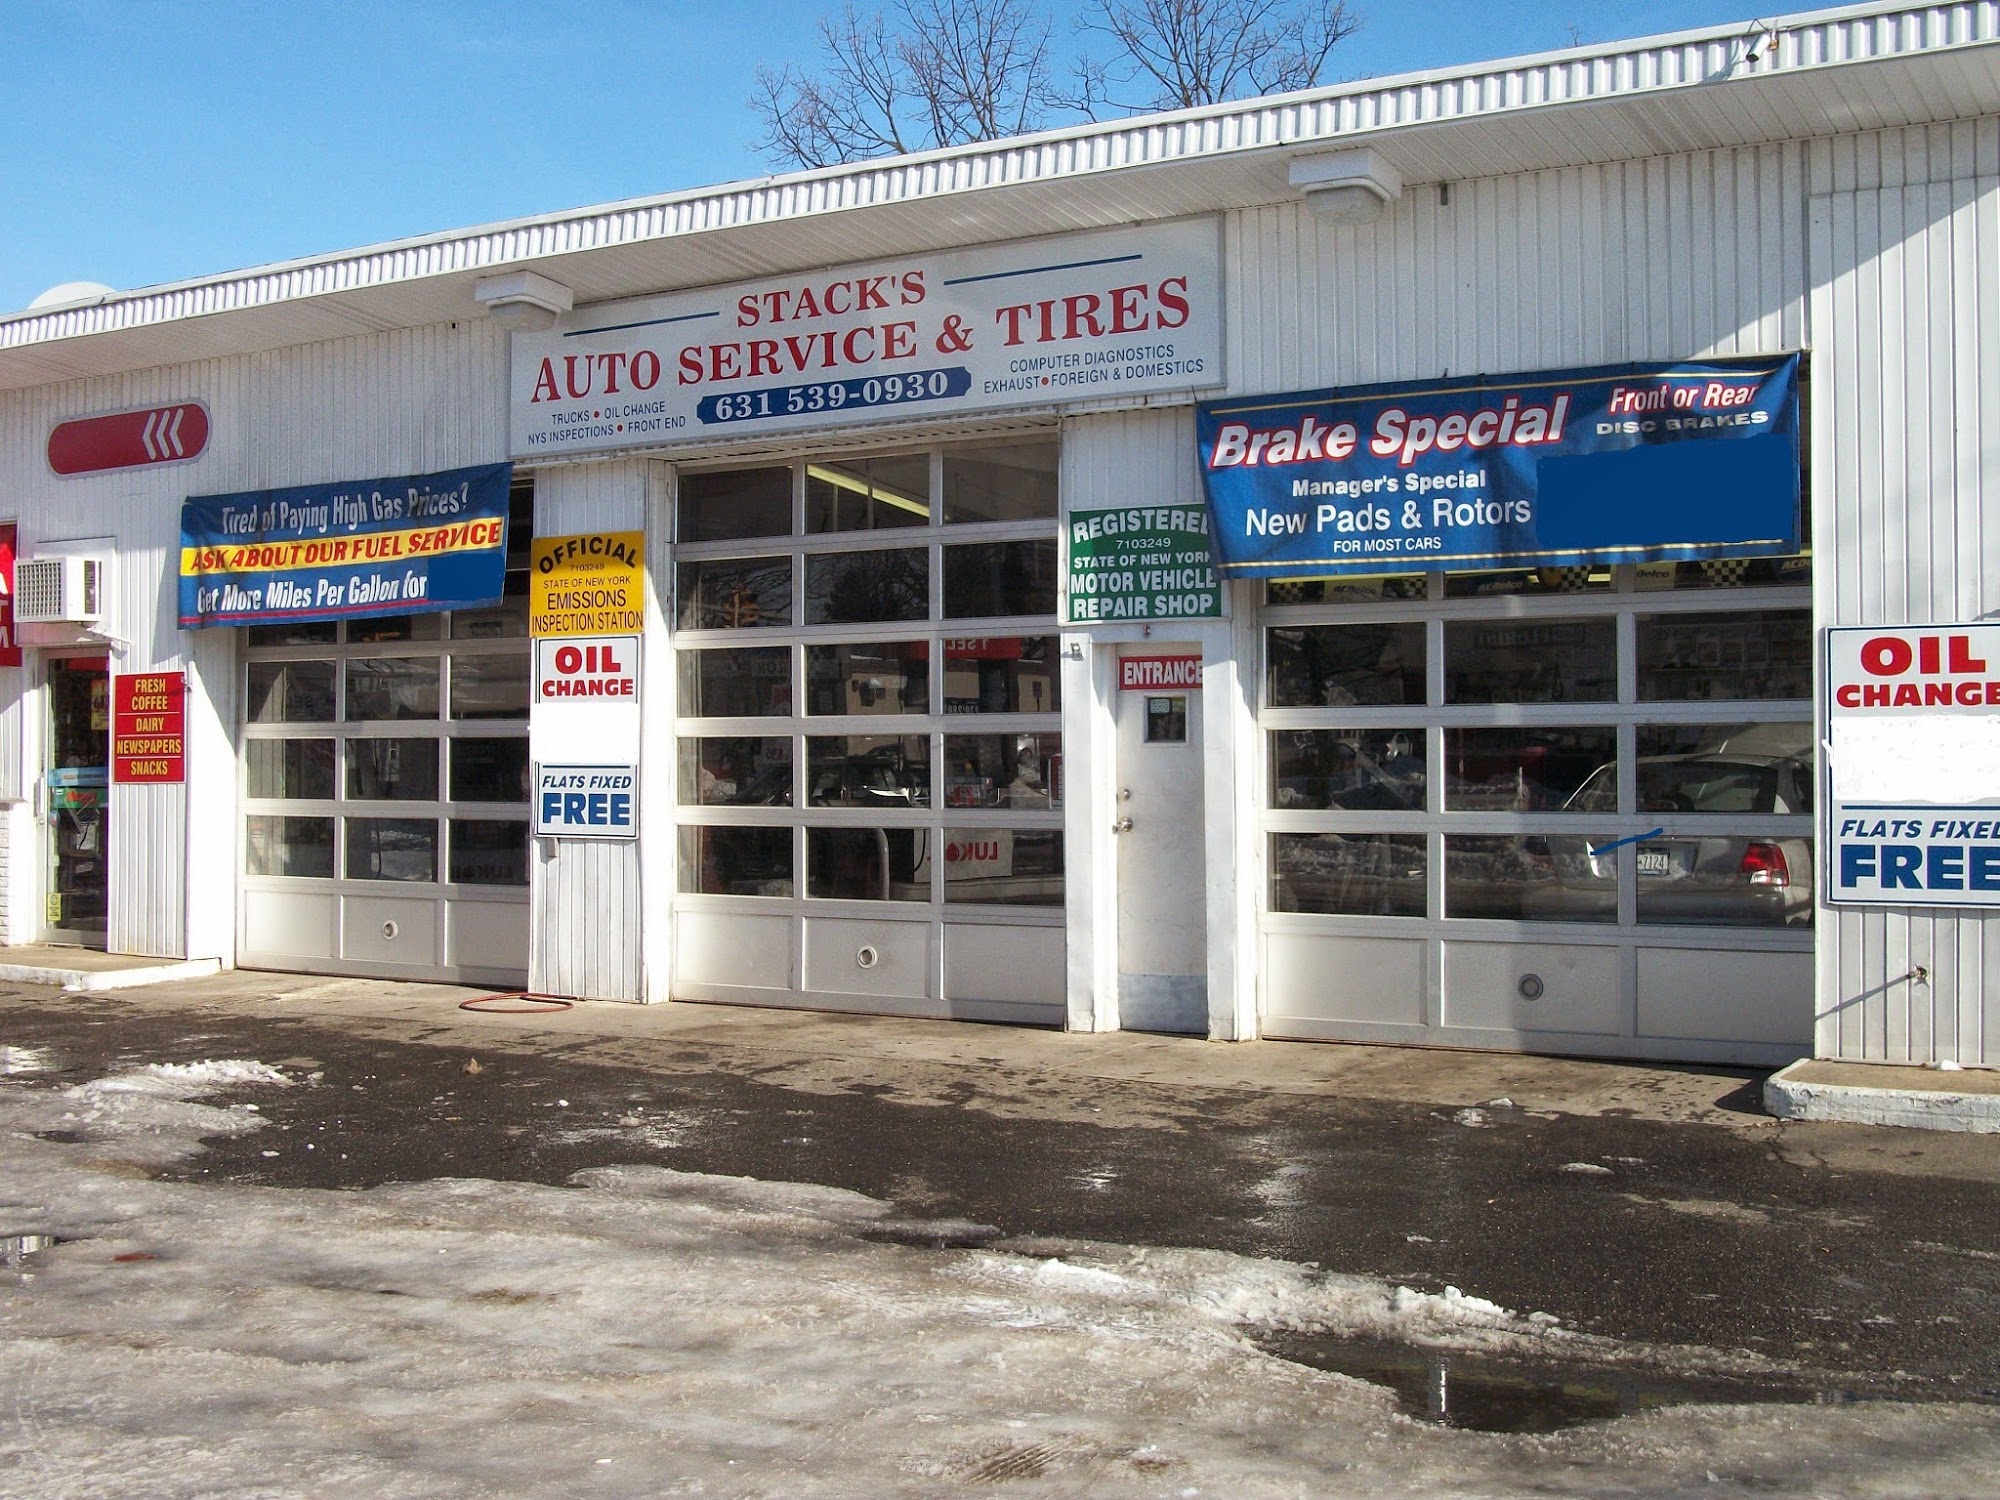 JK Auto Service & Tires